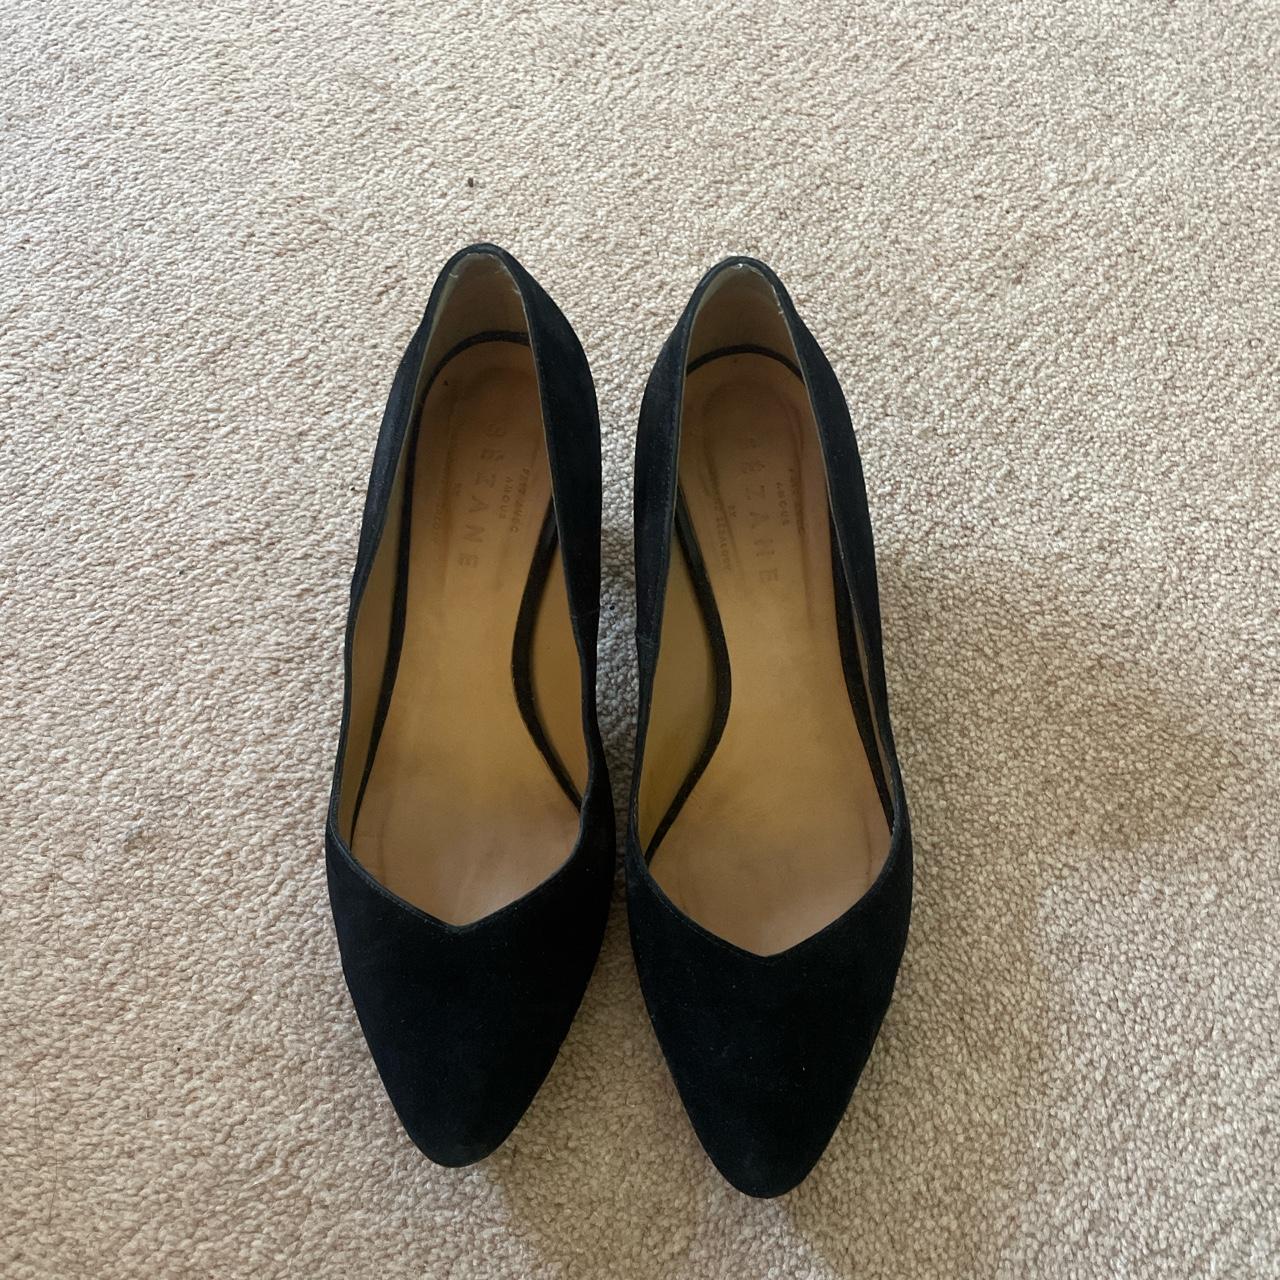 Sezane court shoes, uk size 5 - Depop